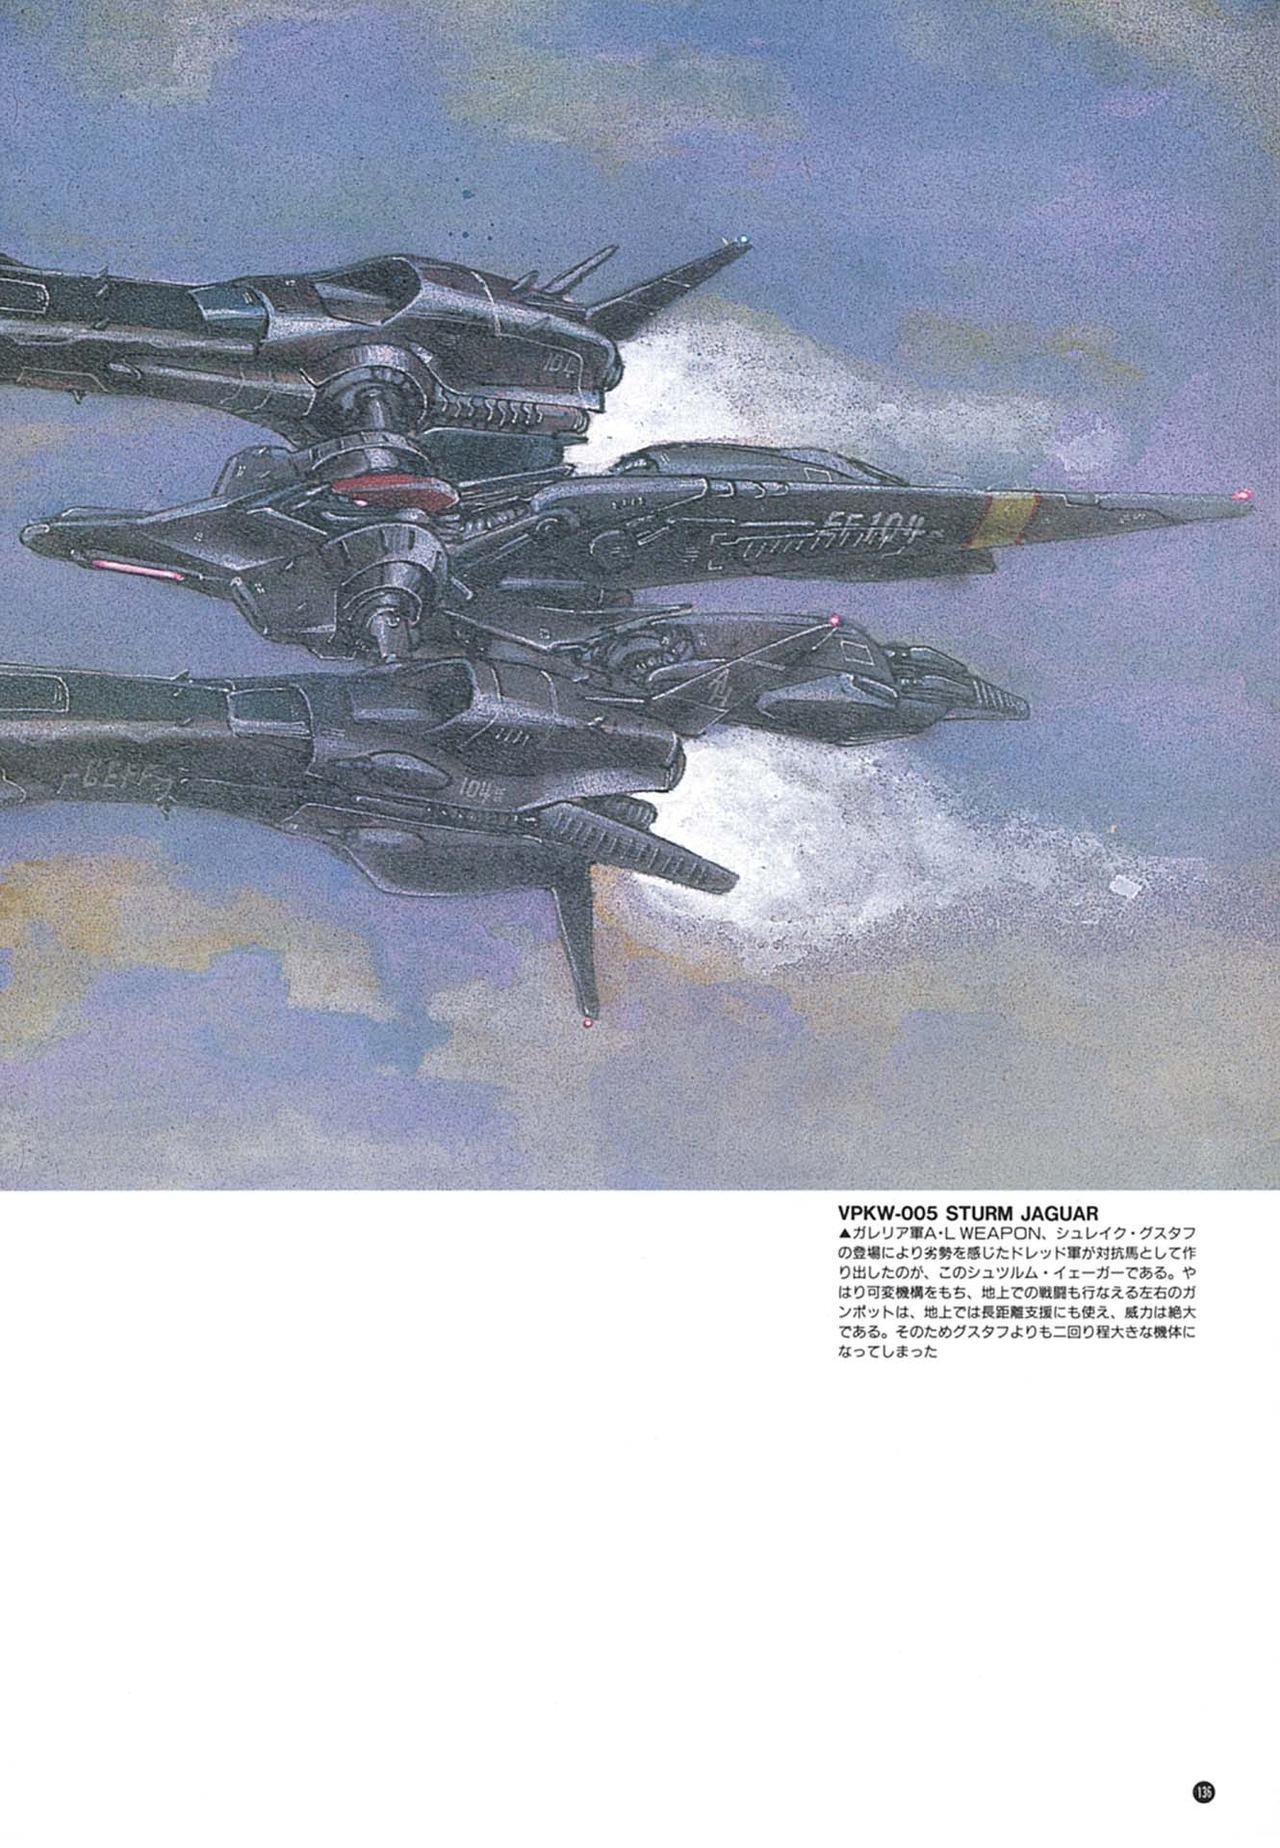 [Kazuhisa Kondo] Kazuhisa Kondo 2D & 3D Works - Go Ahead - From Mobile Suit Gundam to Original Mechanism 135